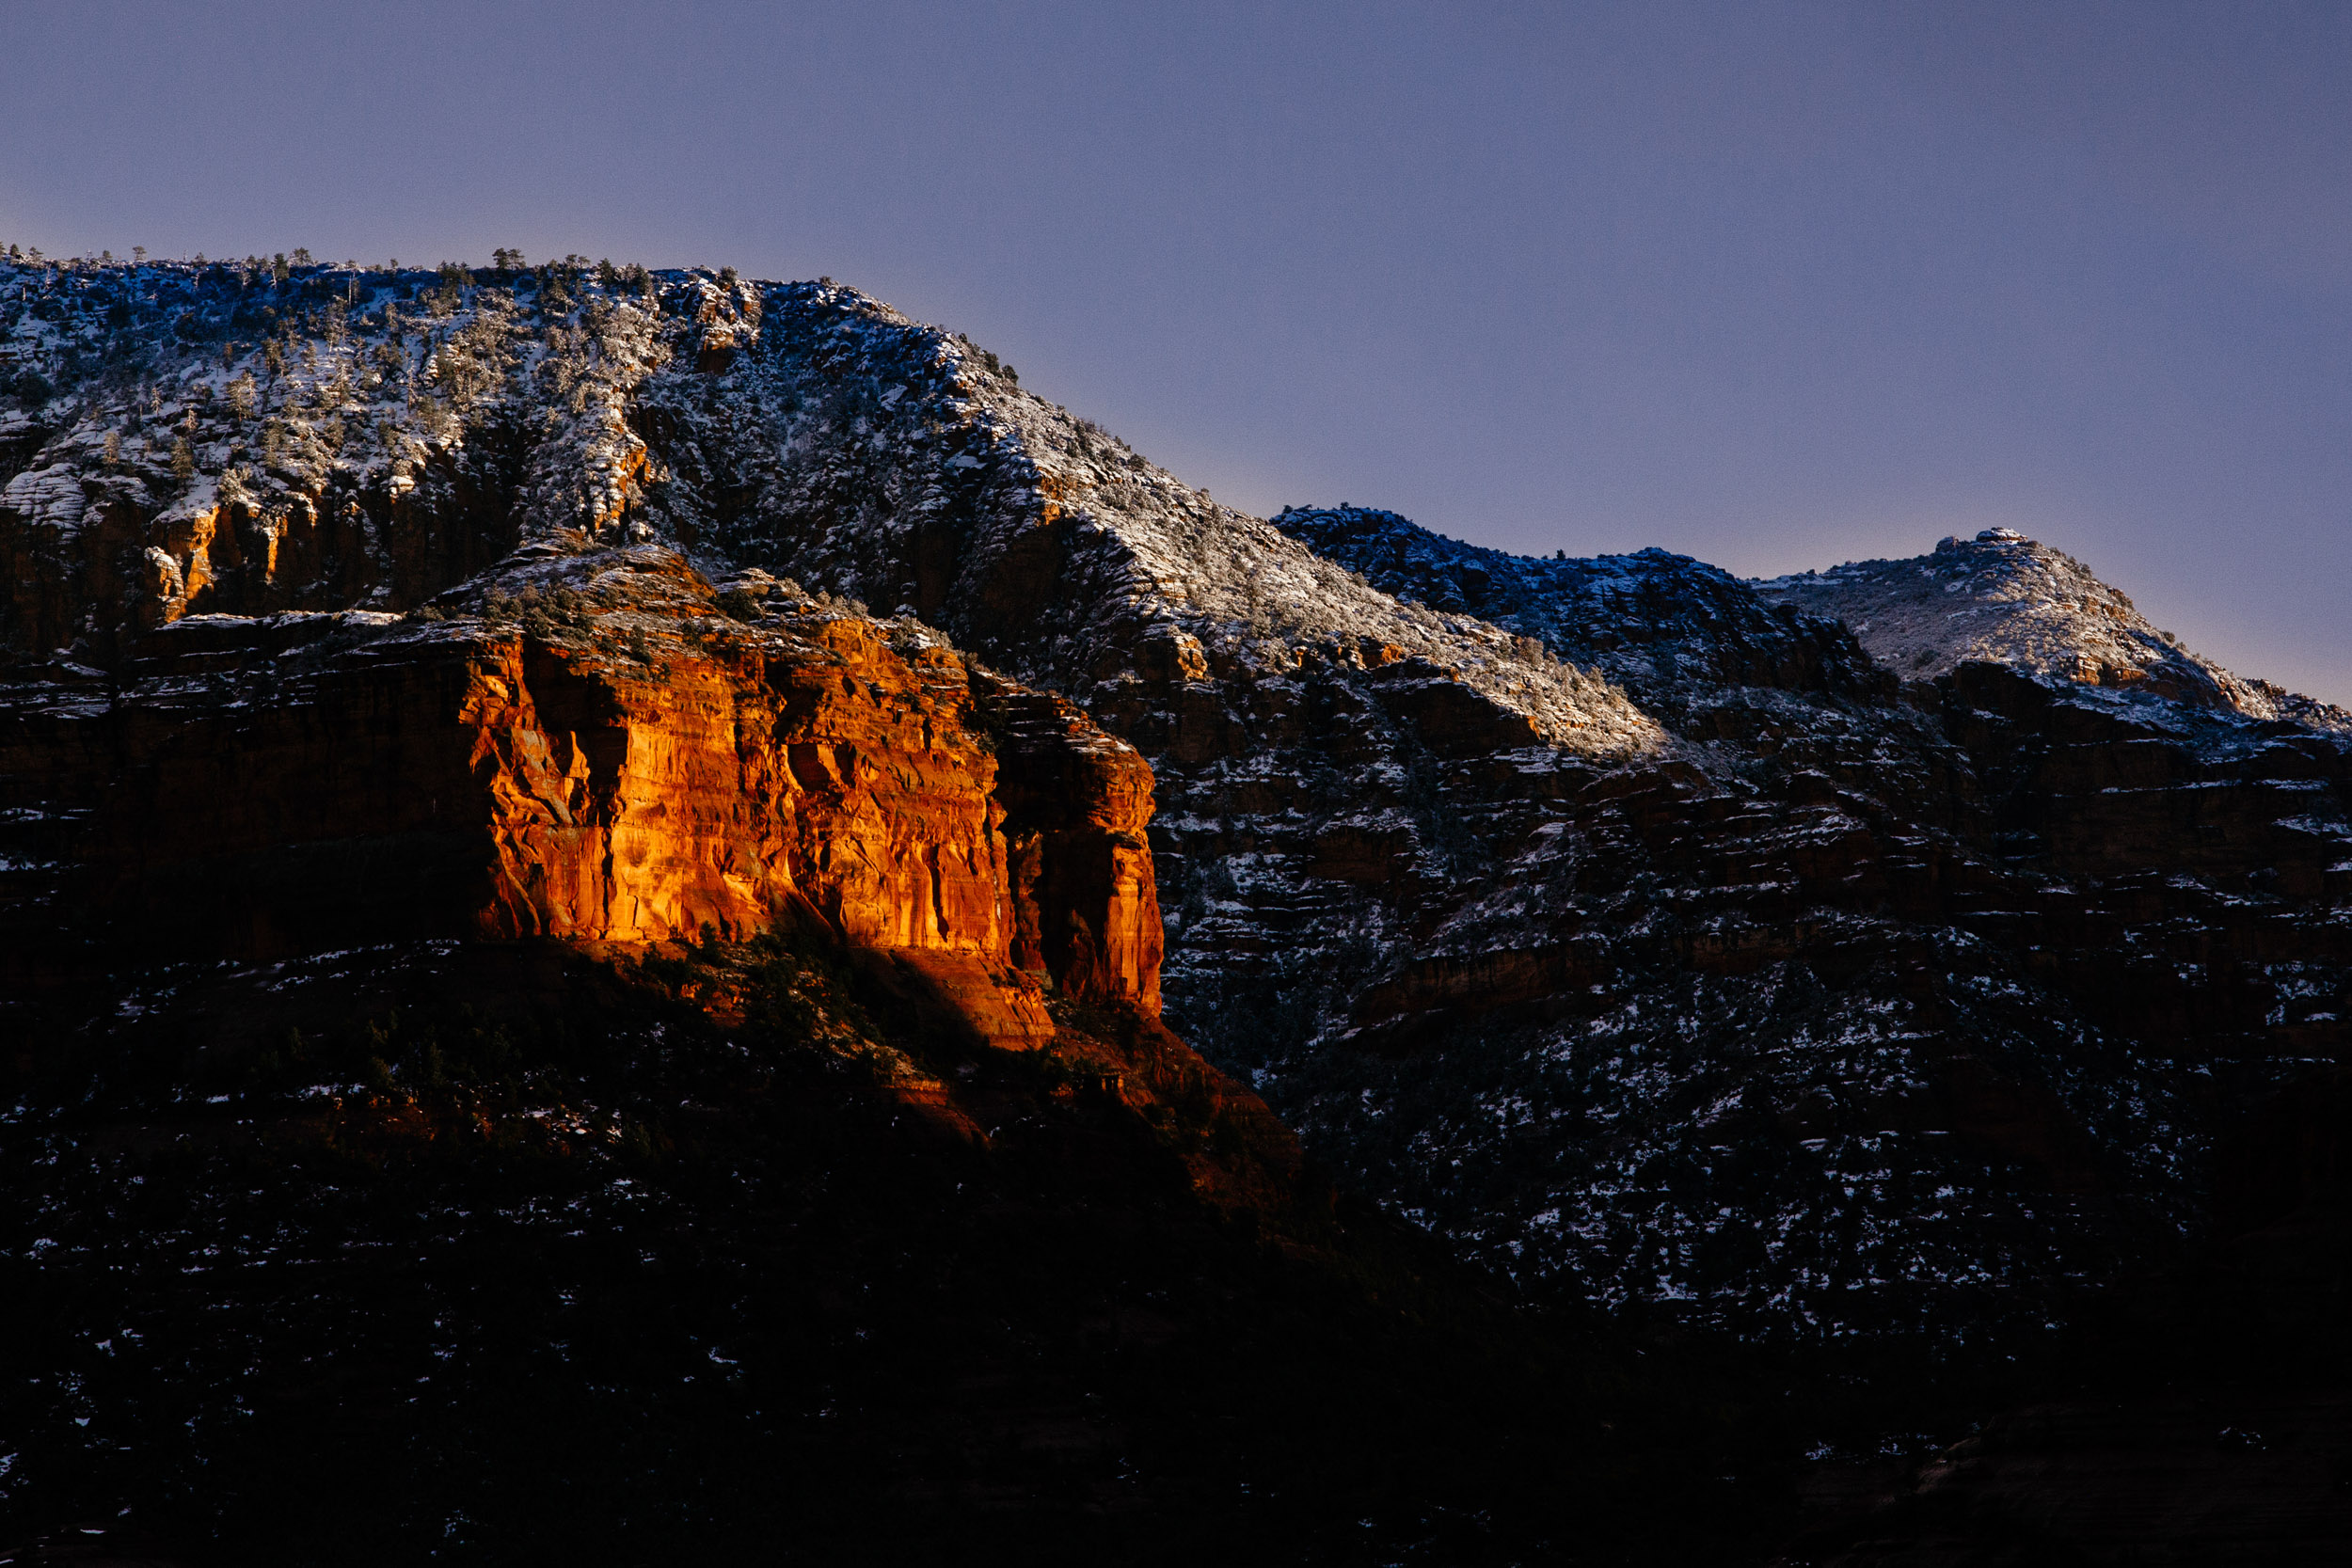 Last light against a Sedona cliff